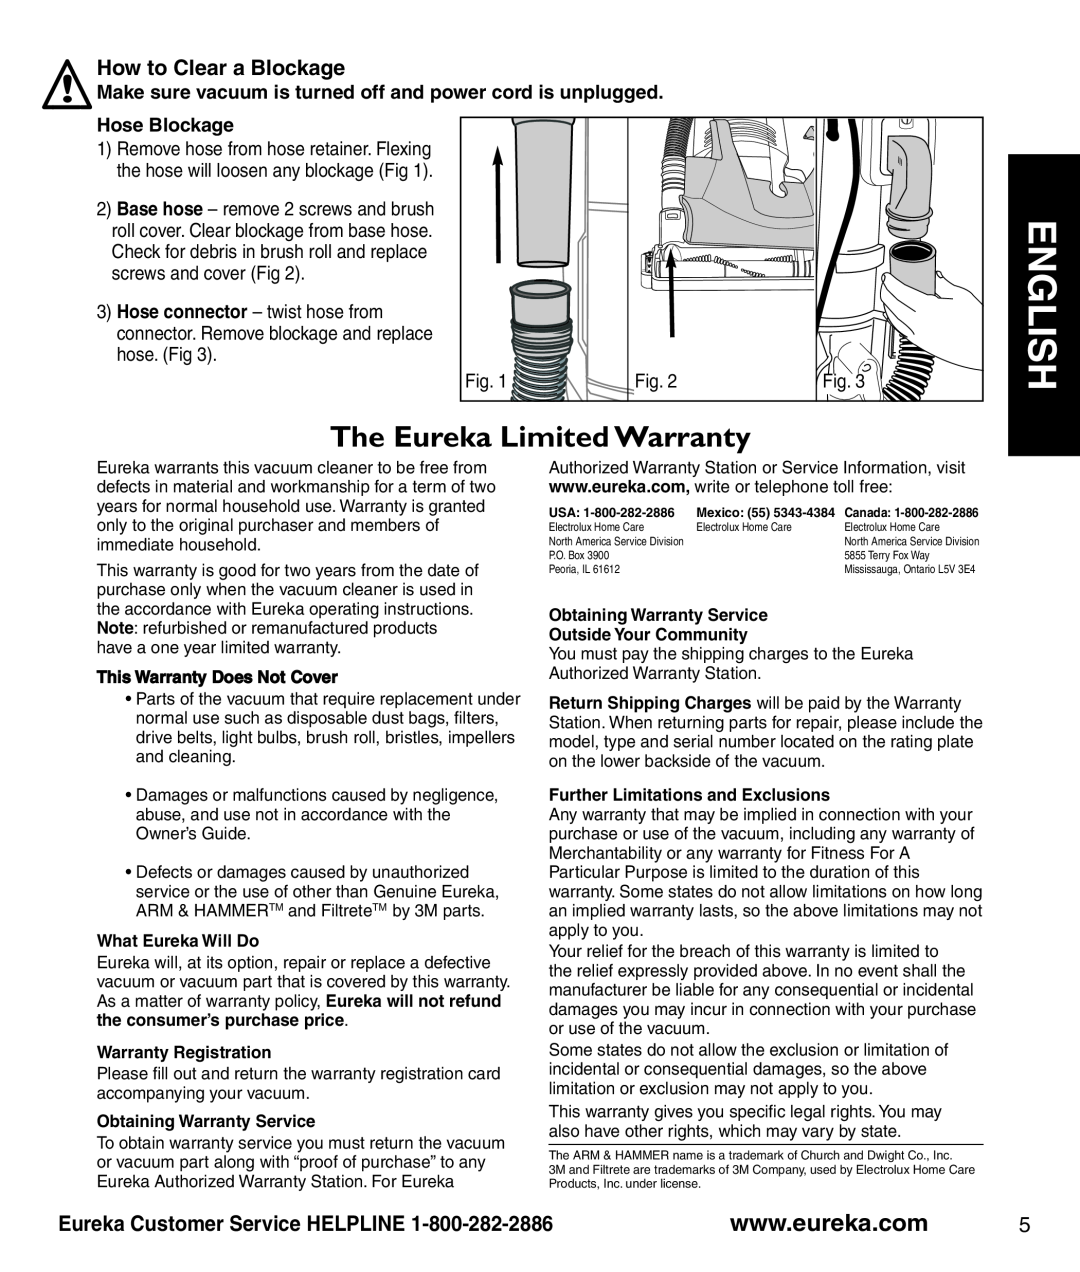 Eureka 3281 How to Clear a Blockage, Hose Blockage, English, The Eureka Limited Warranty, Eureka Customer Service HELPLINE 